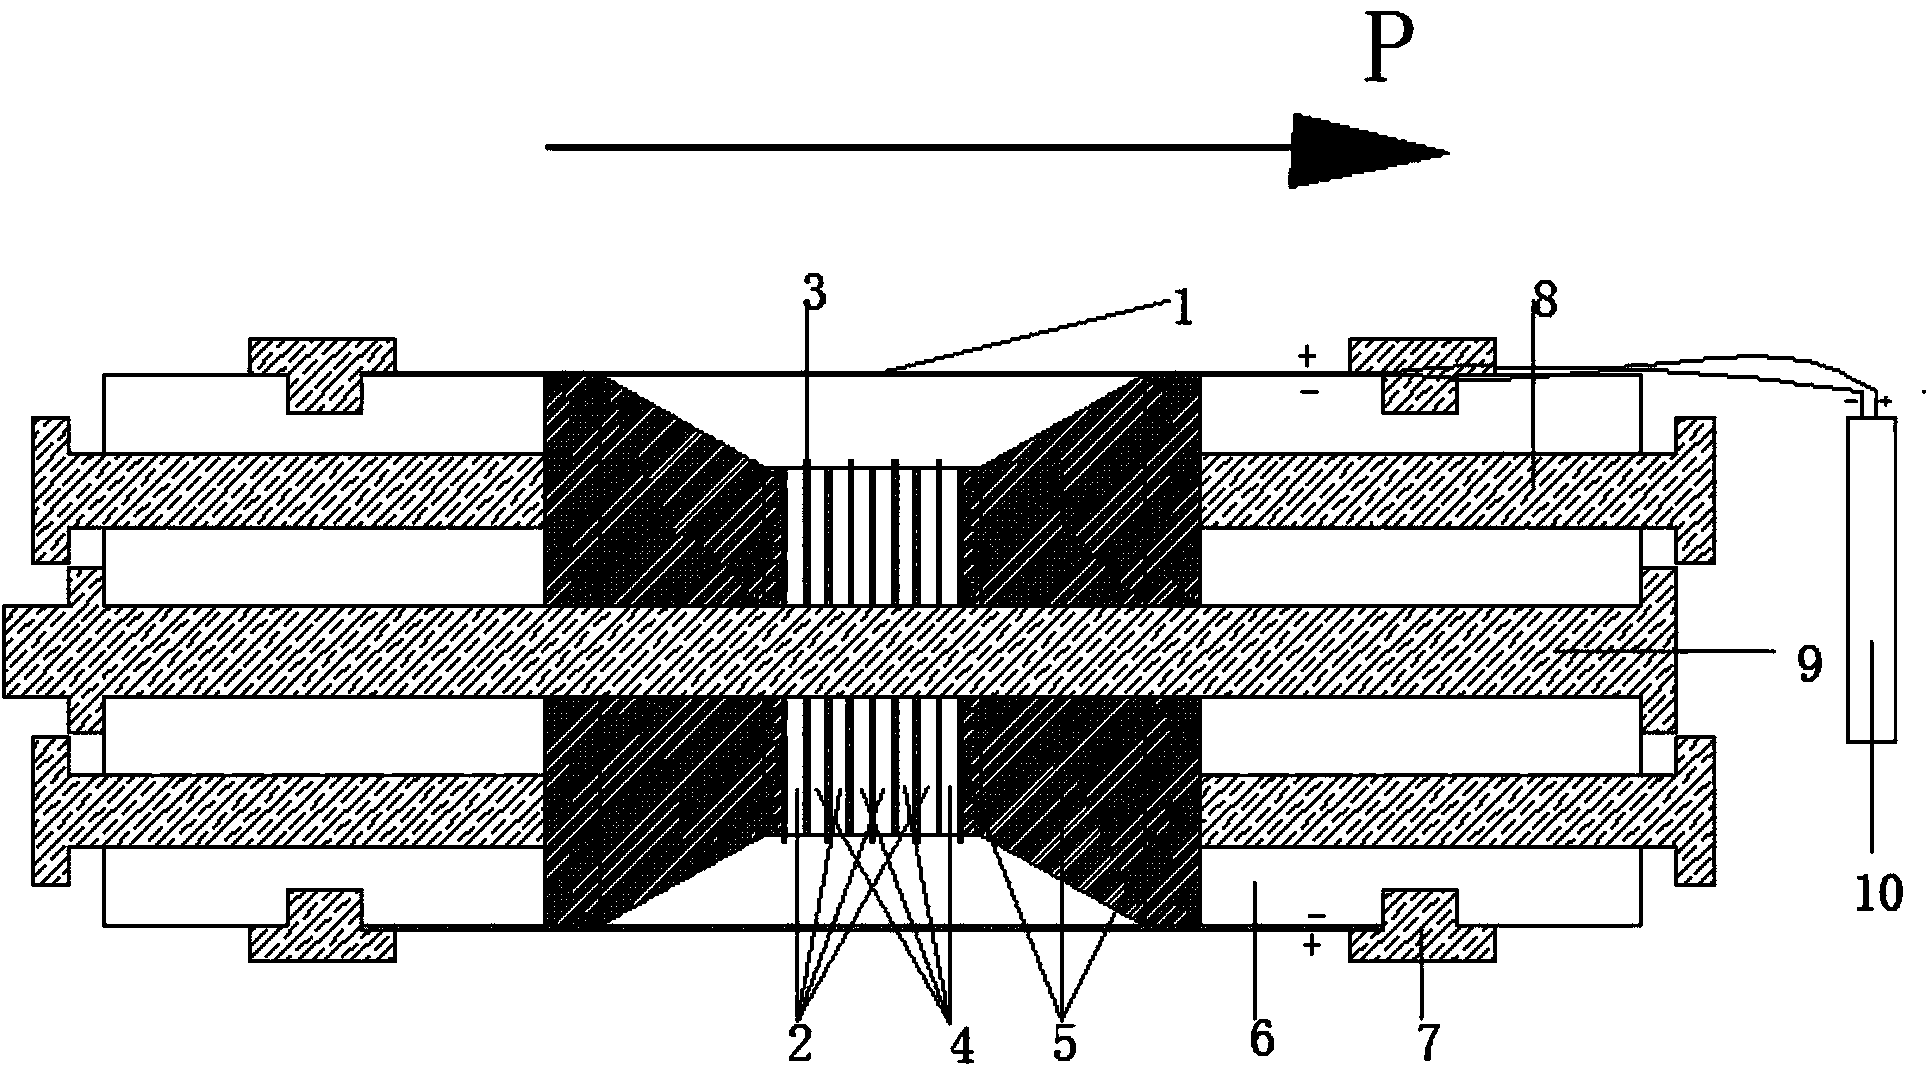 A flextensional transducer using a PVDF piezoelectric film